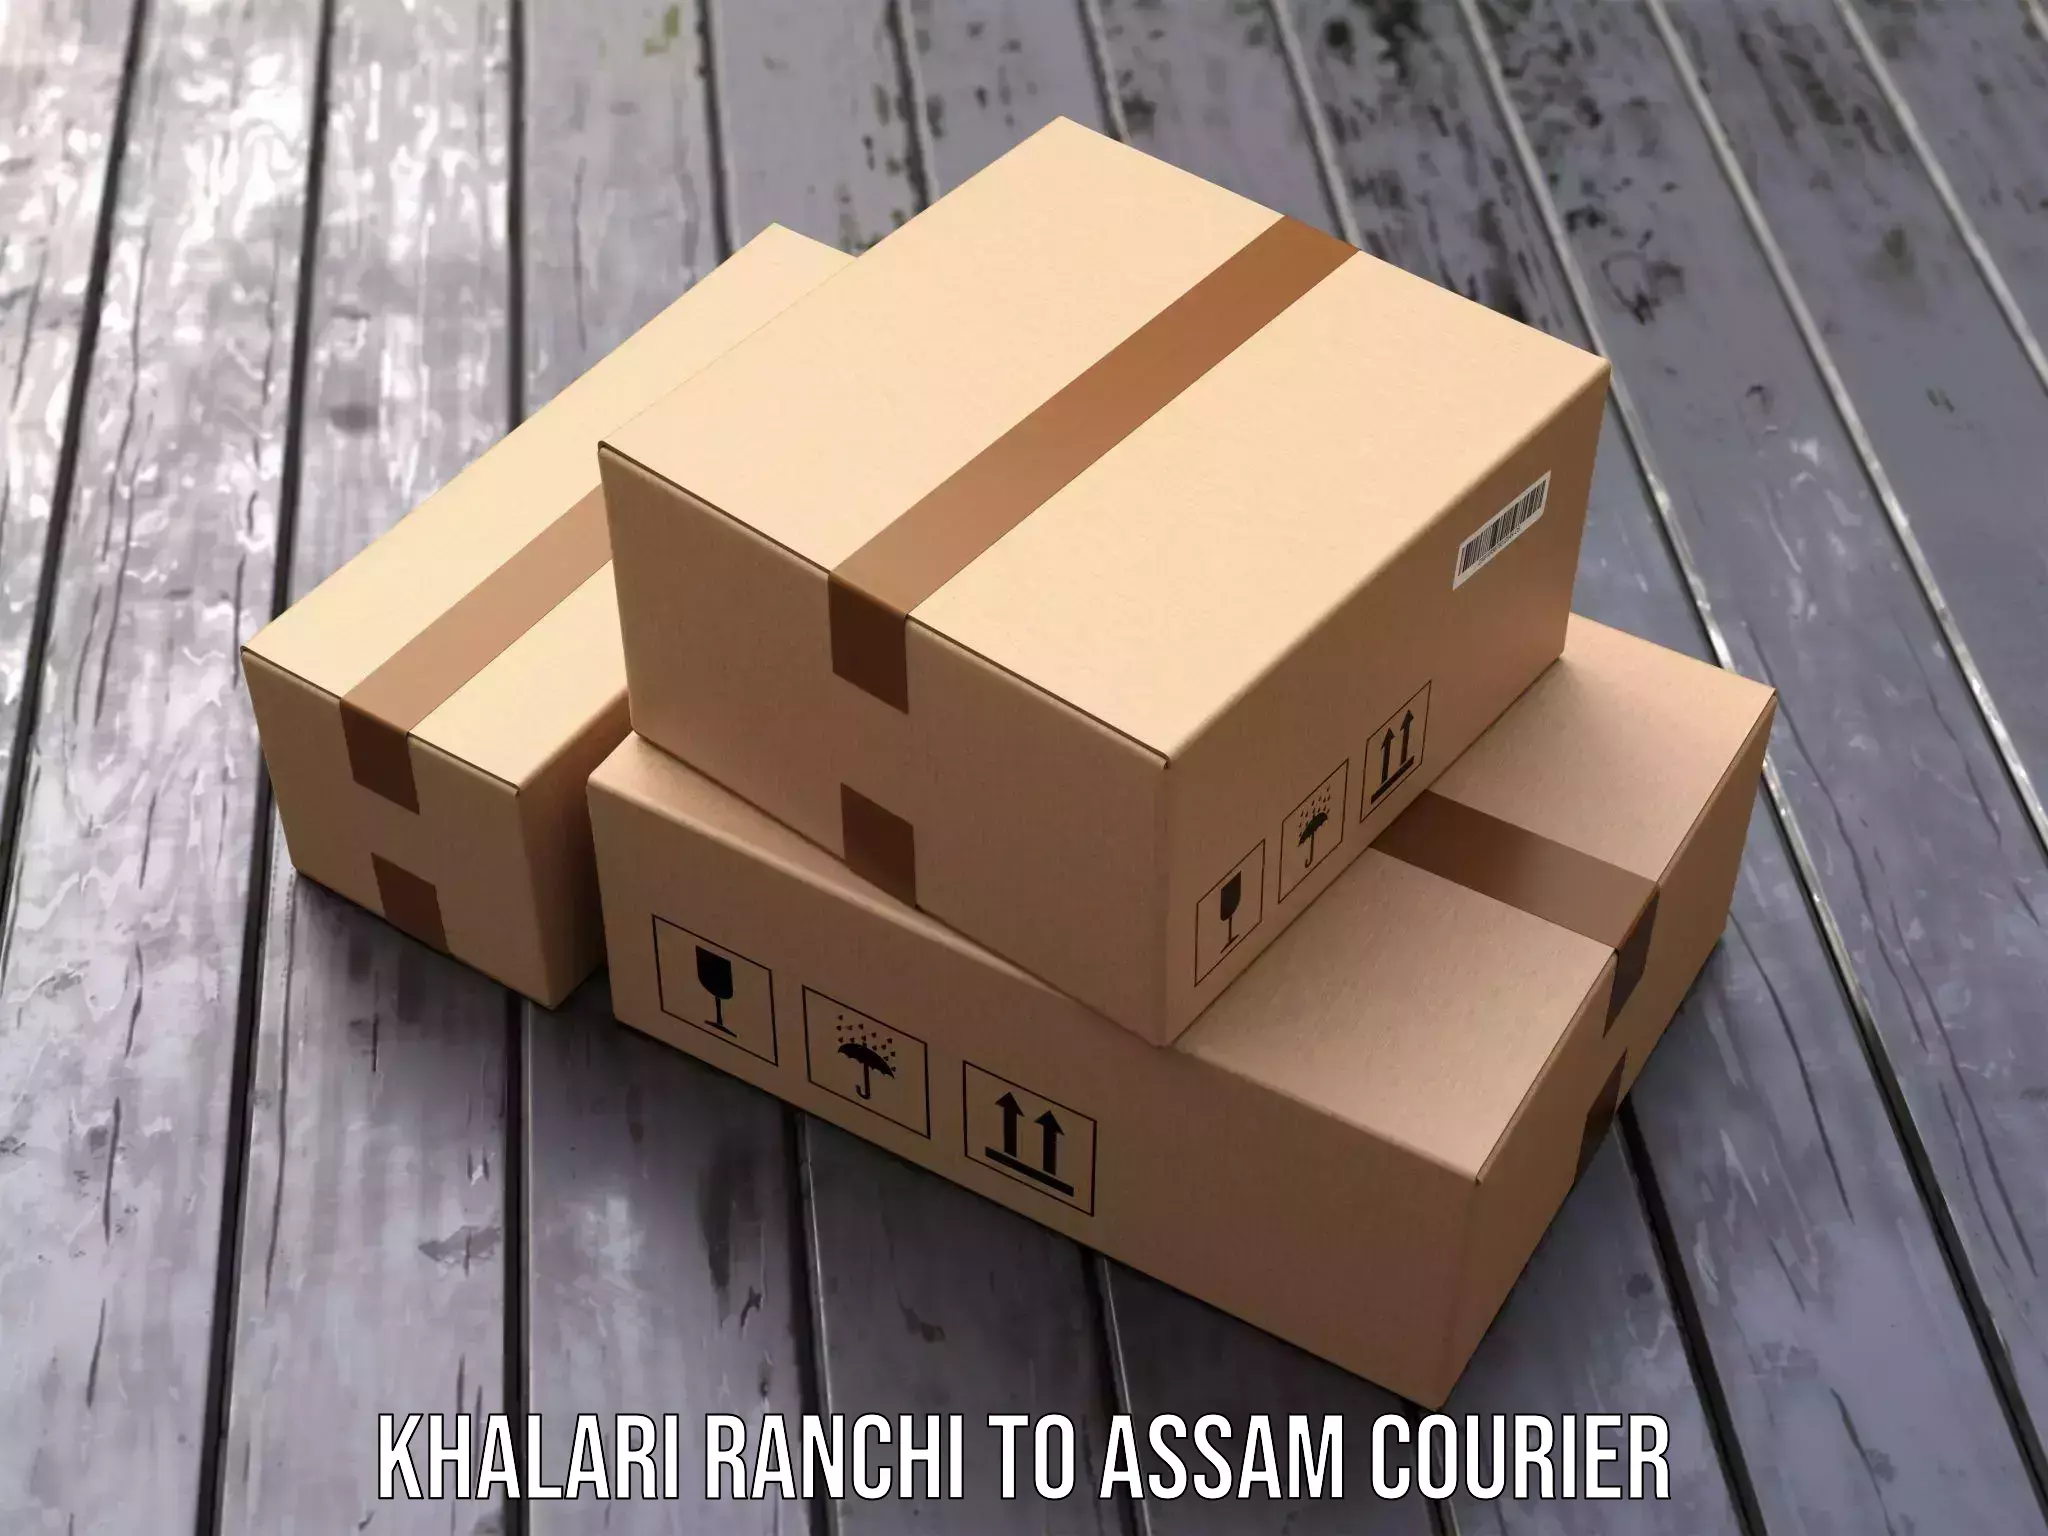 Courier service innovation Khalari Ranchi to Jagiroad